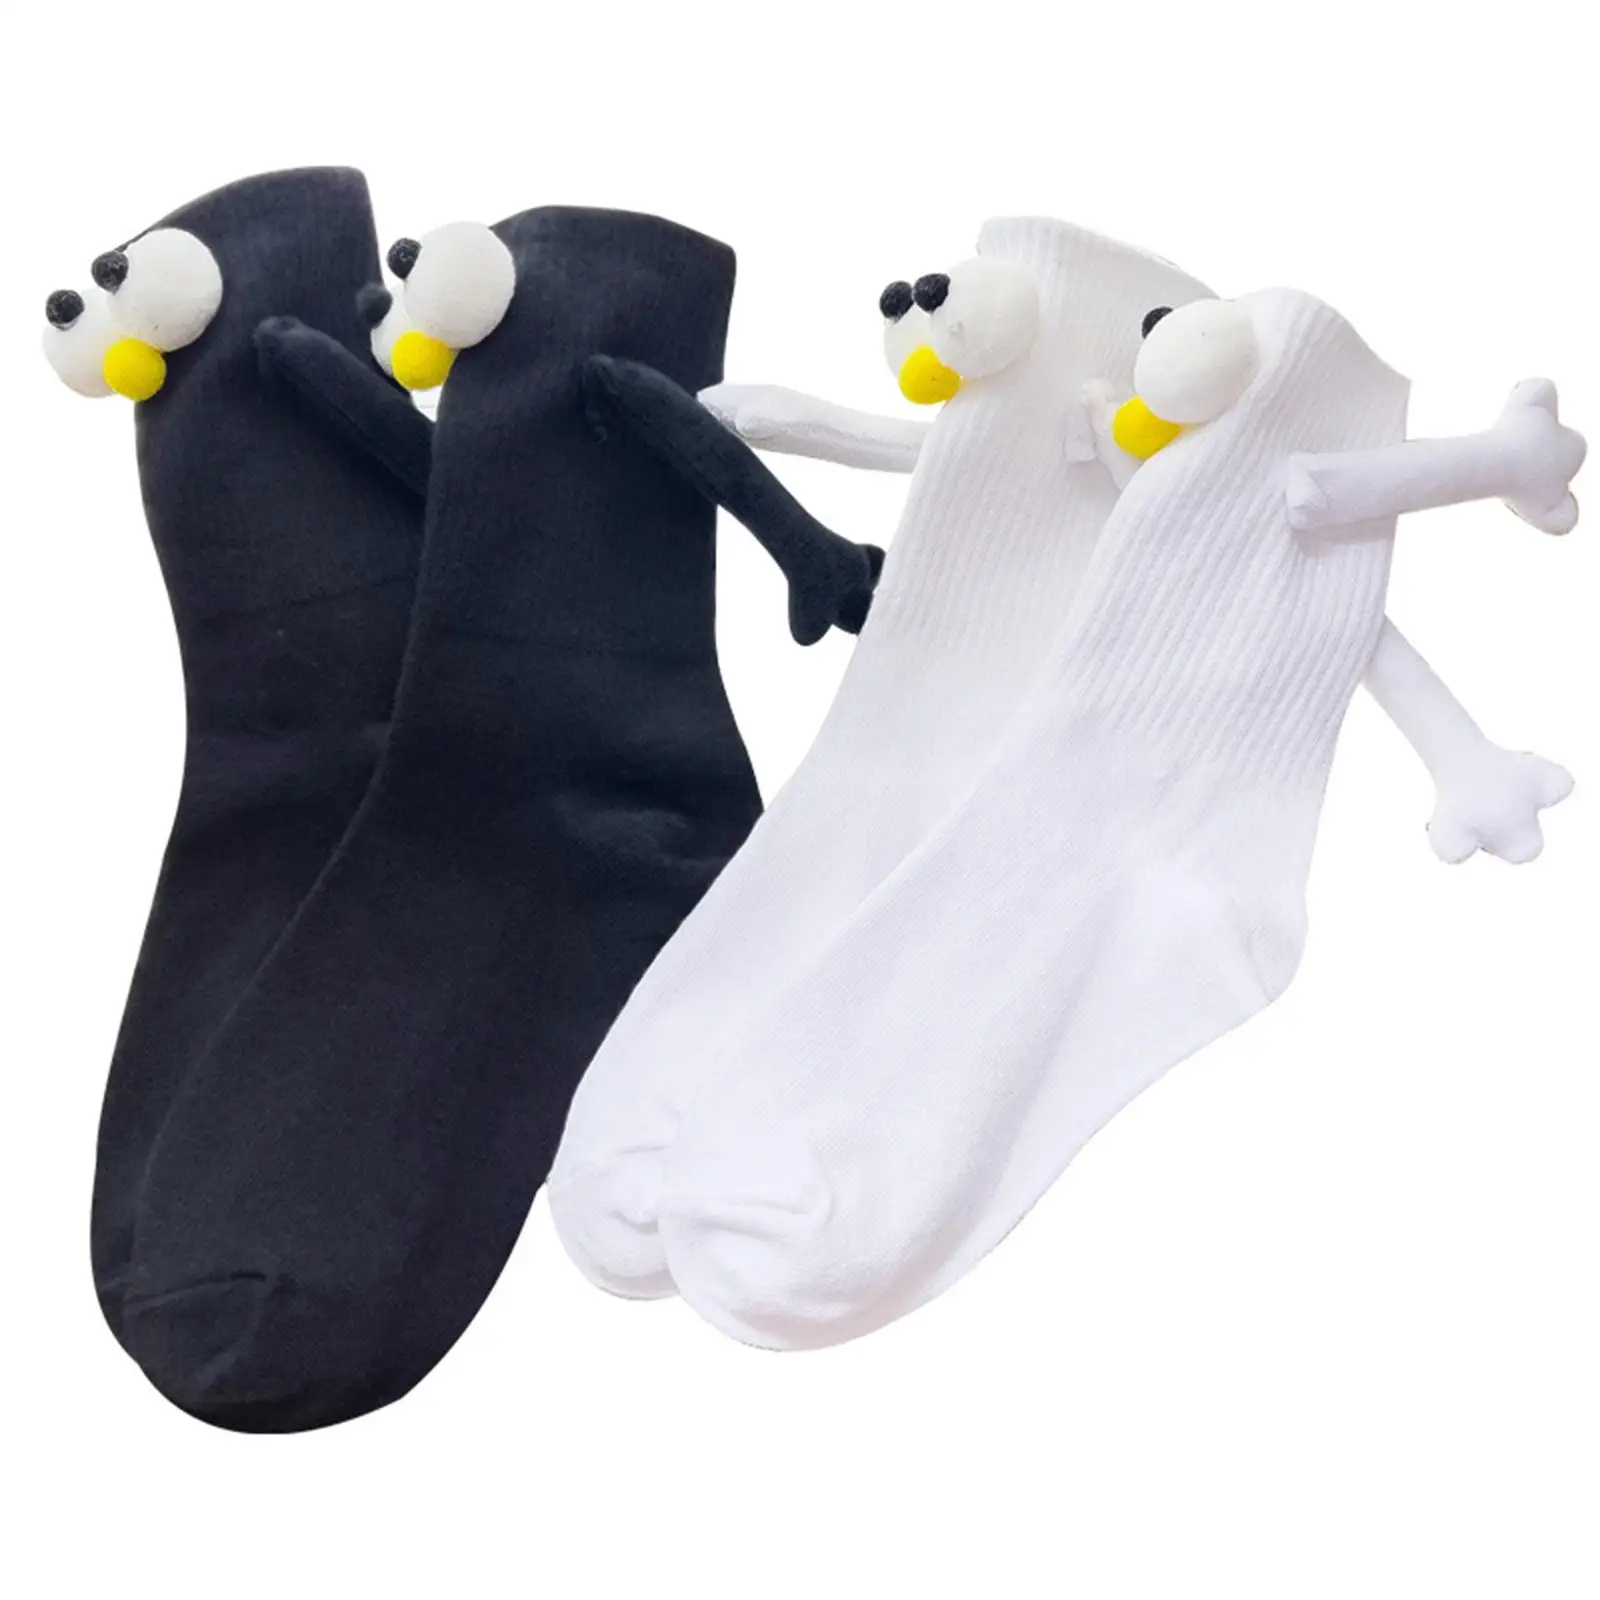 Suction 3D Couple Socks Novelty Socks Summer Fashion Couple Holding Hands Sock for Home Bedroom Hiking Living Room Classroom